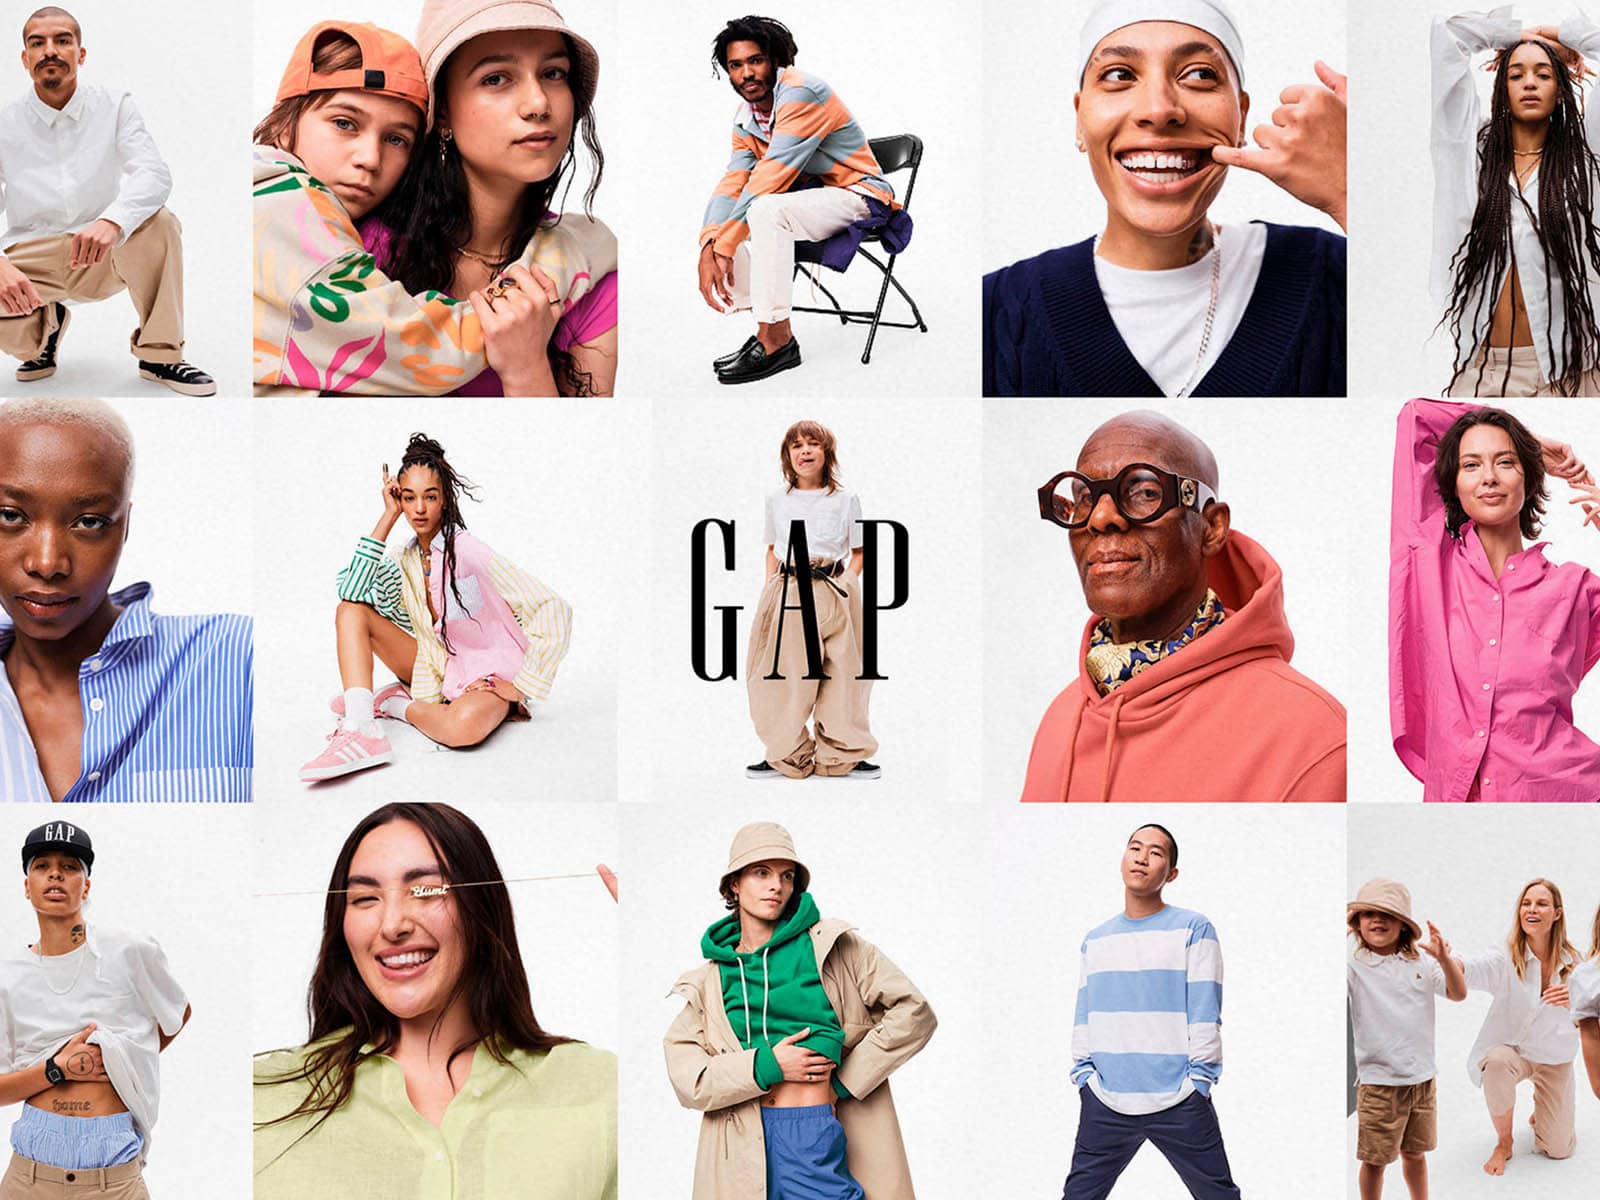 Dapper Dan leads GAP’s latest campaign celebrating diversity